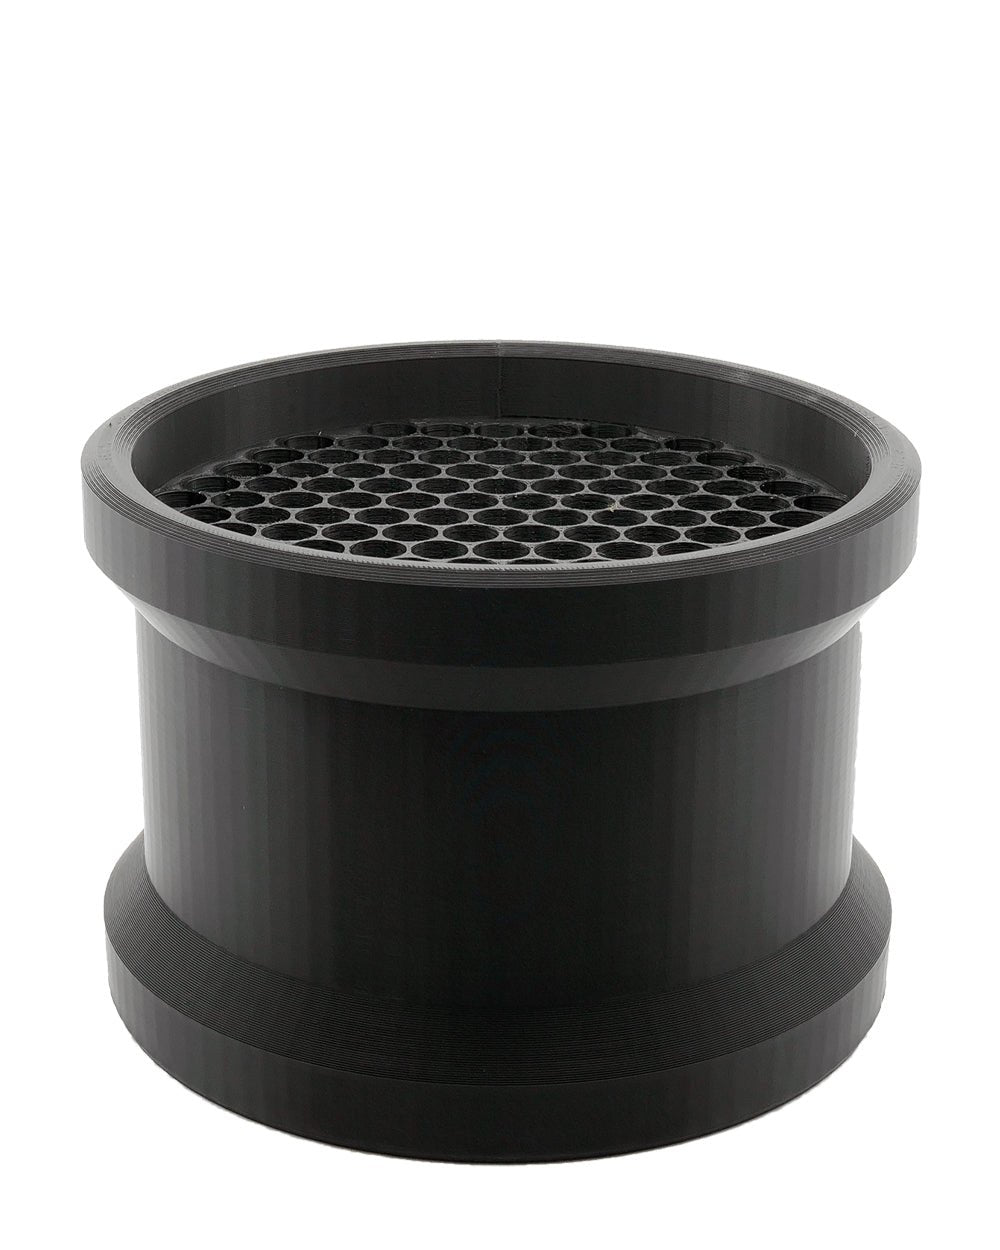 HUMBOLDT | Black Pre-Rolled Cones Filling Machine Cartridge 109mm | Fill 121 Cones Per Run - 1